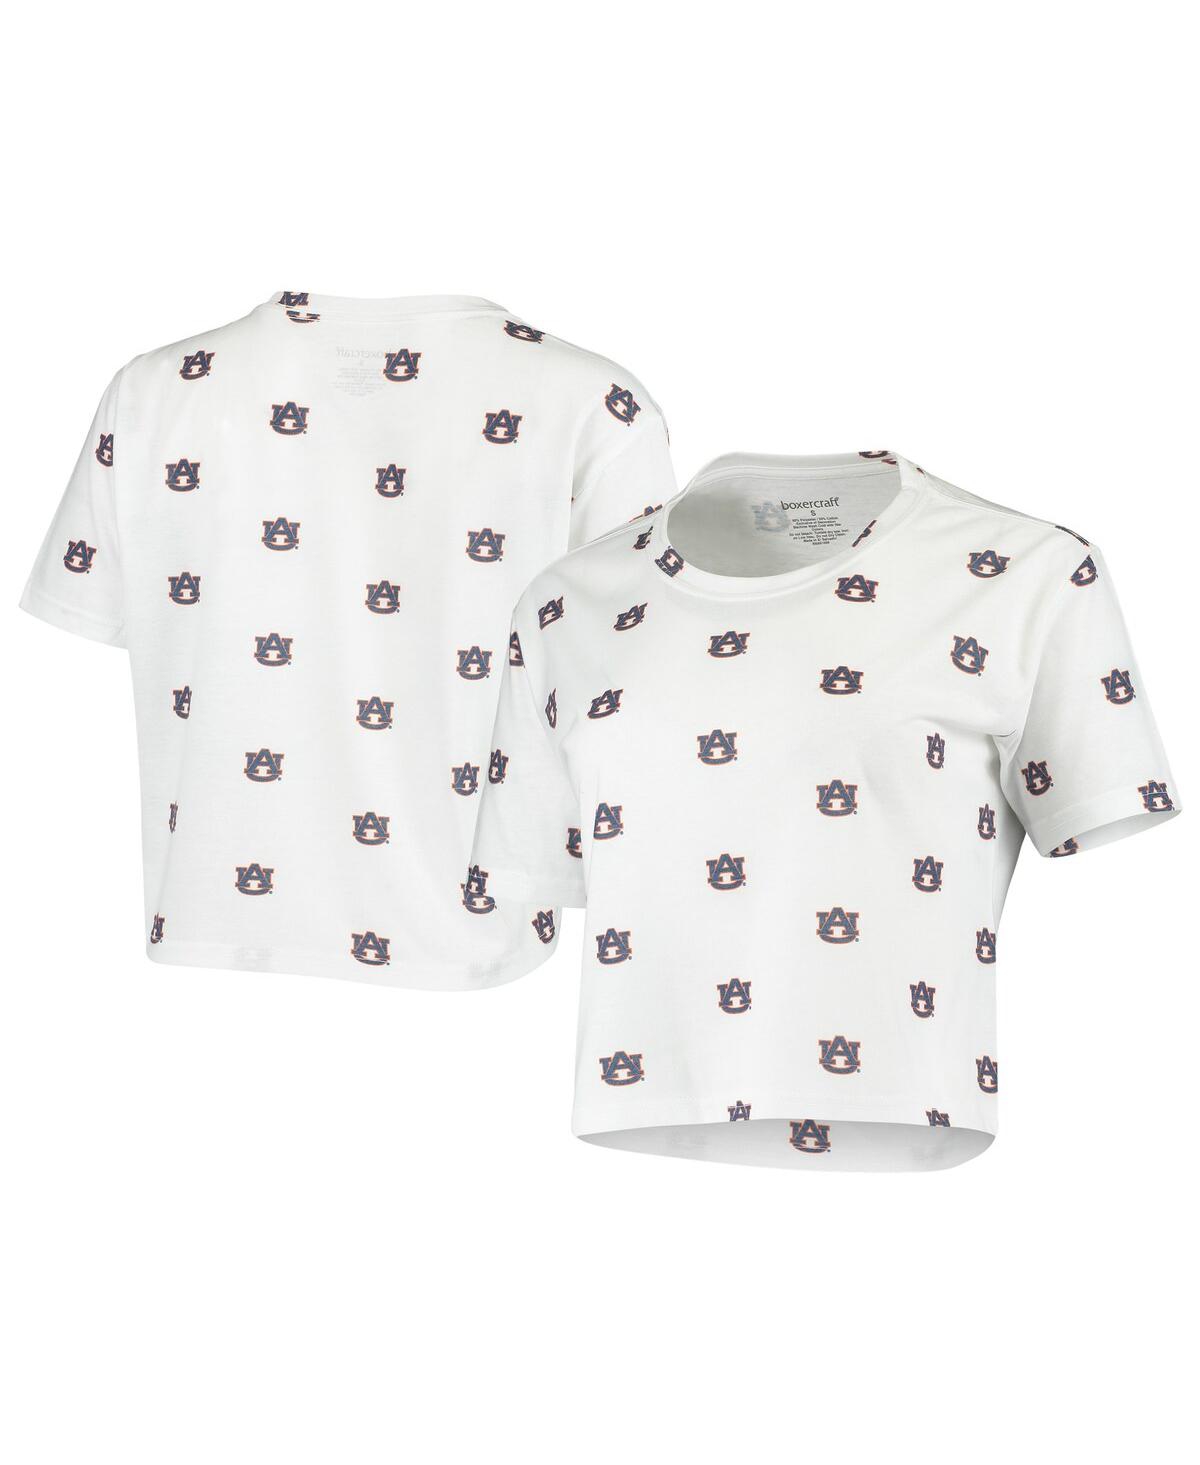 Shop Boxercraft Women's White Auburn Tigers Cropped Allover Print T-shirt